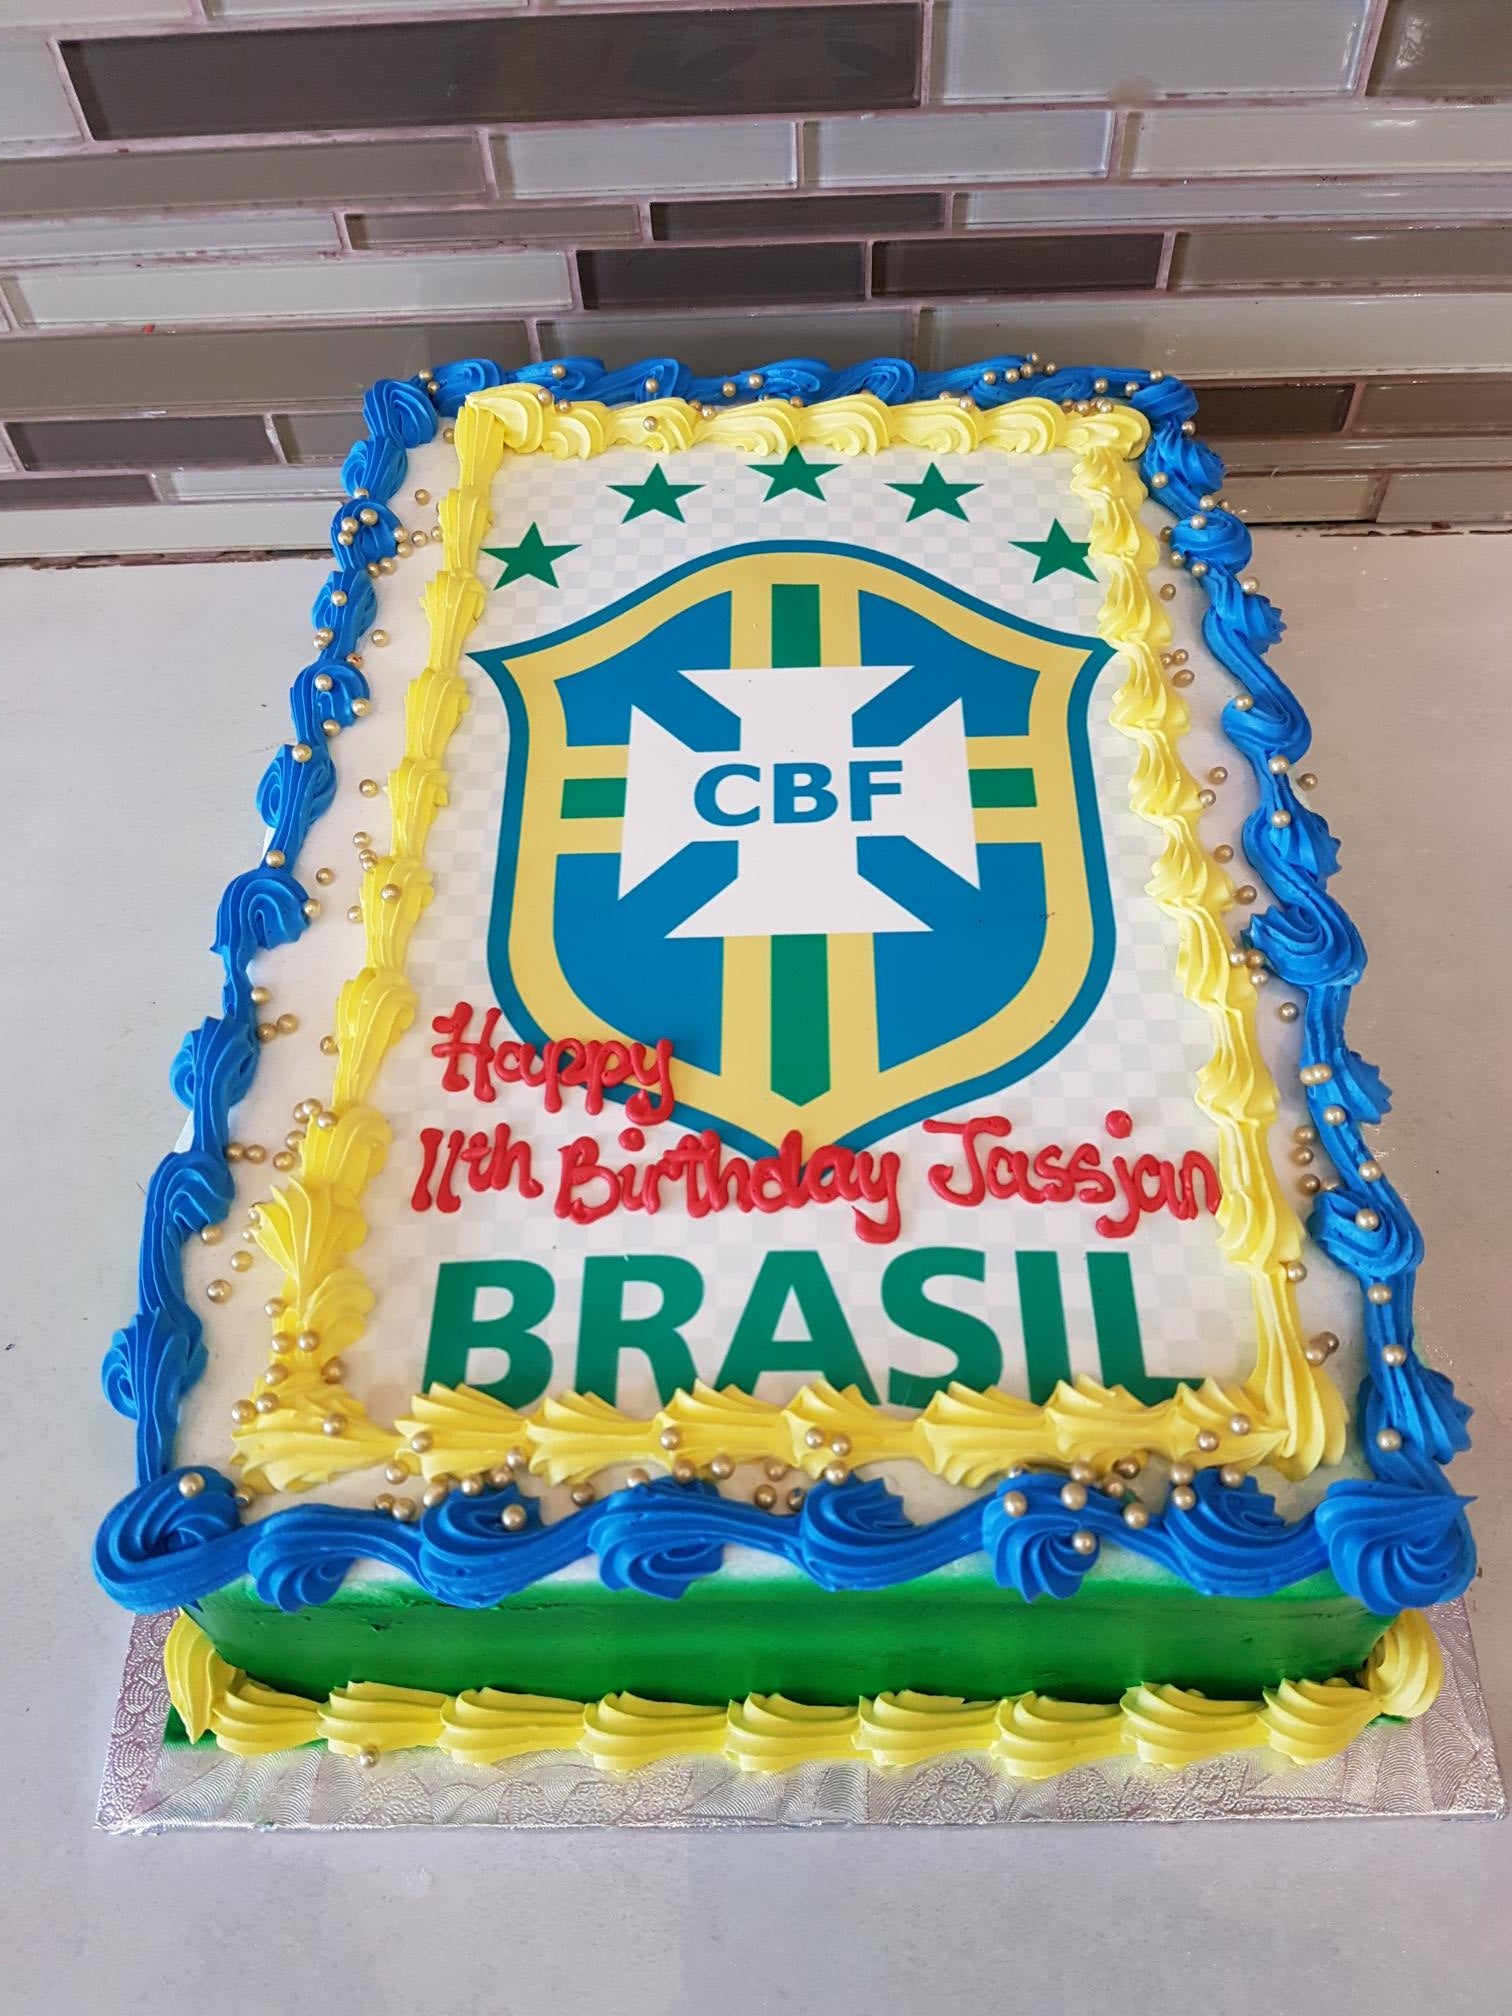 CBF Brazil Photo Cake